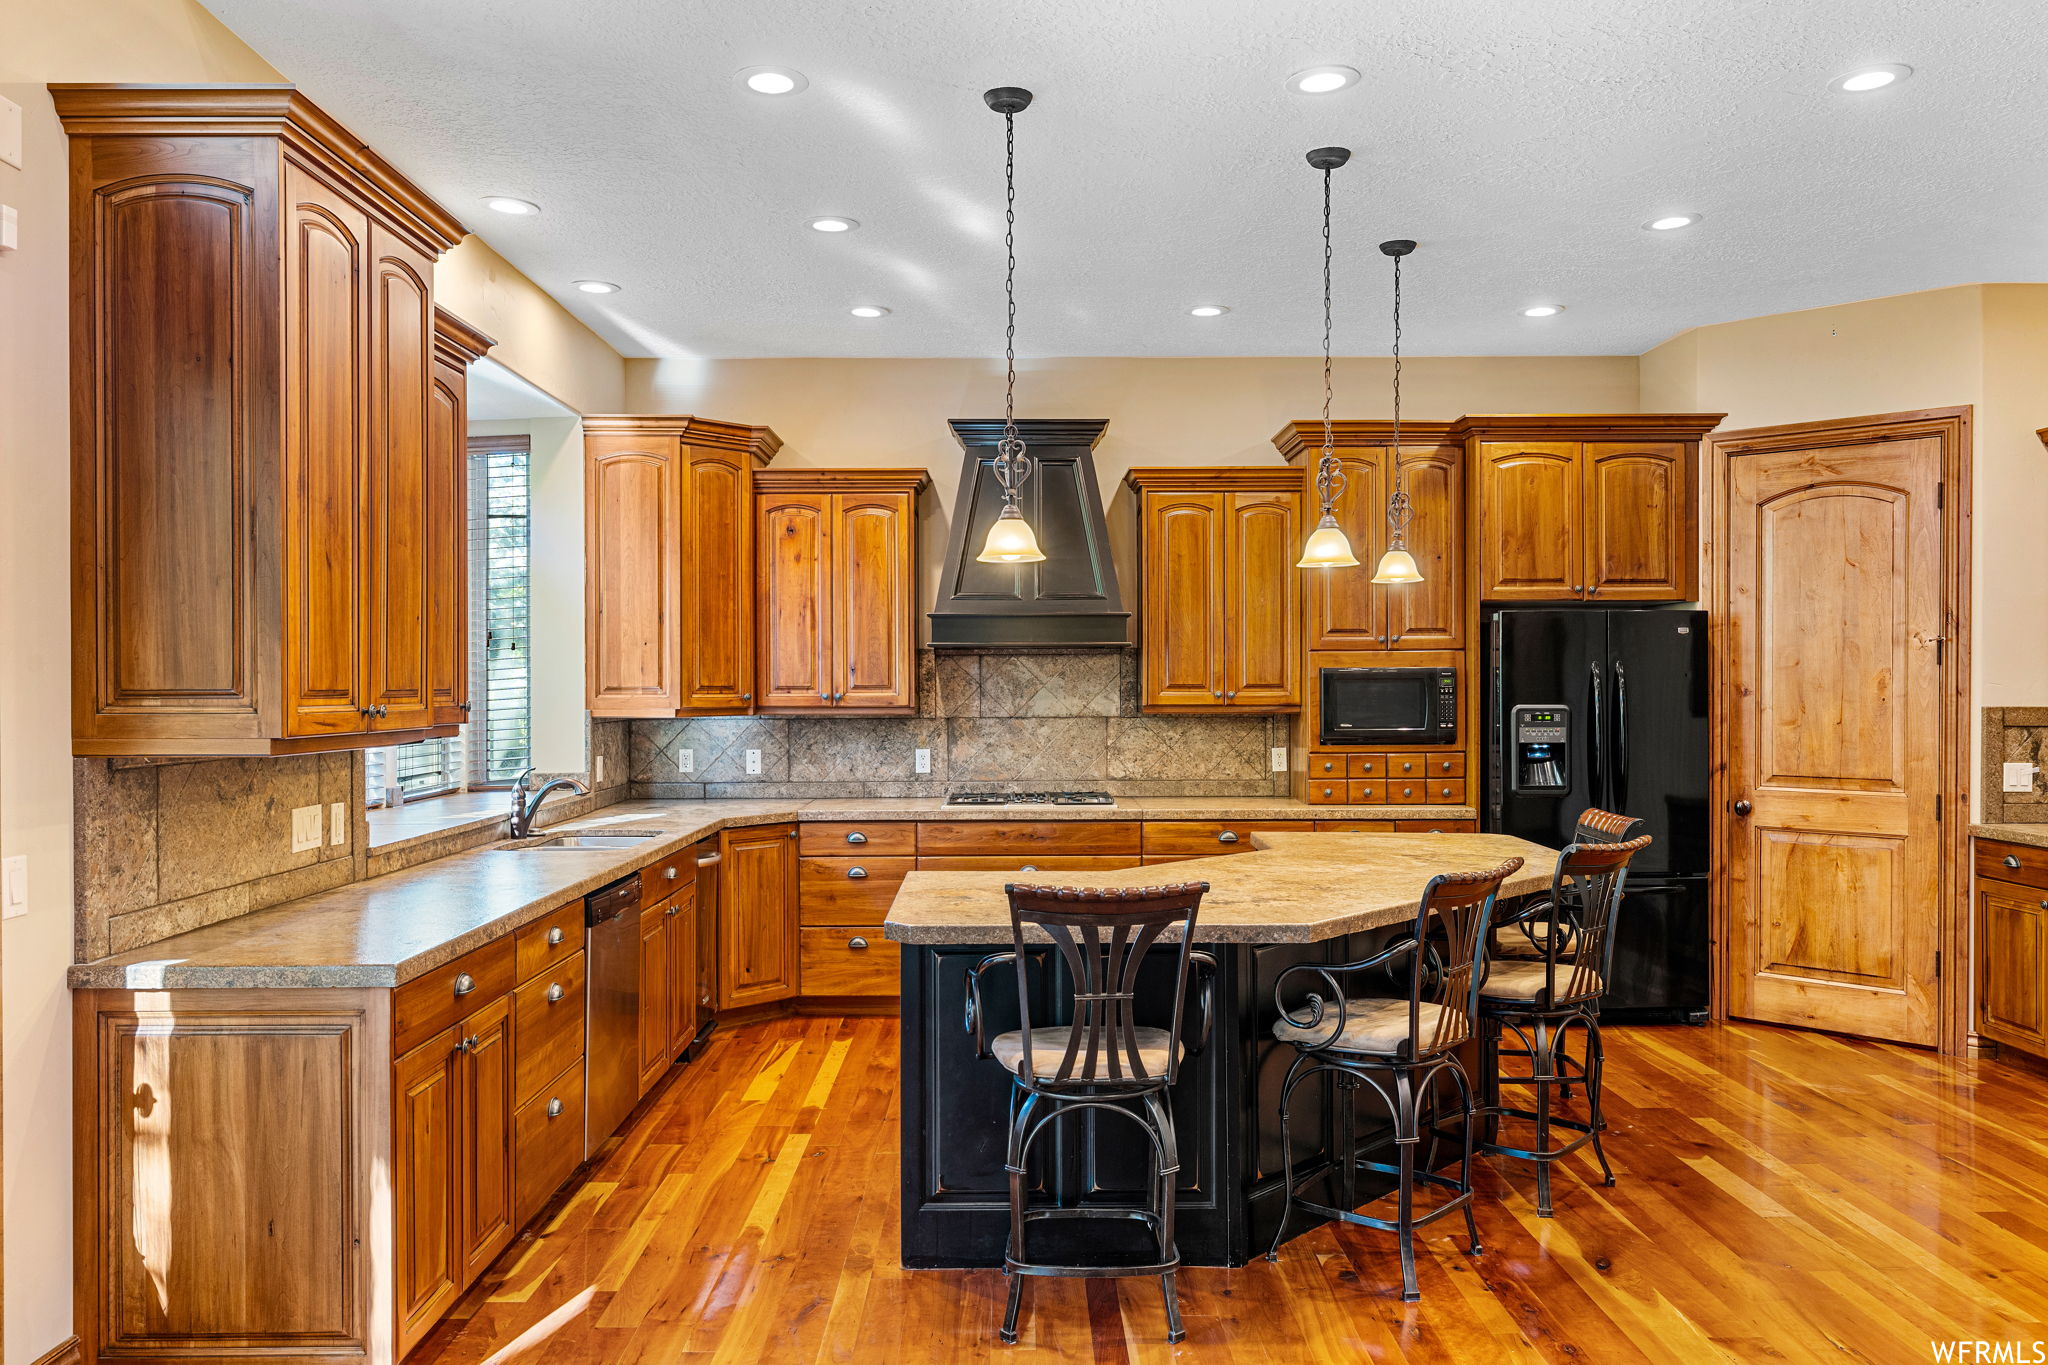 Kitchen with a center island, light hardwood flooring, premium range hood, hanging light fixtures, and backsplash